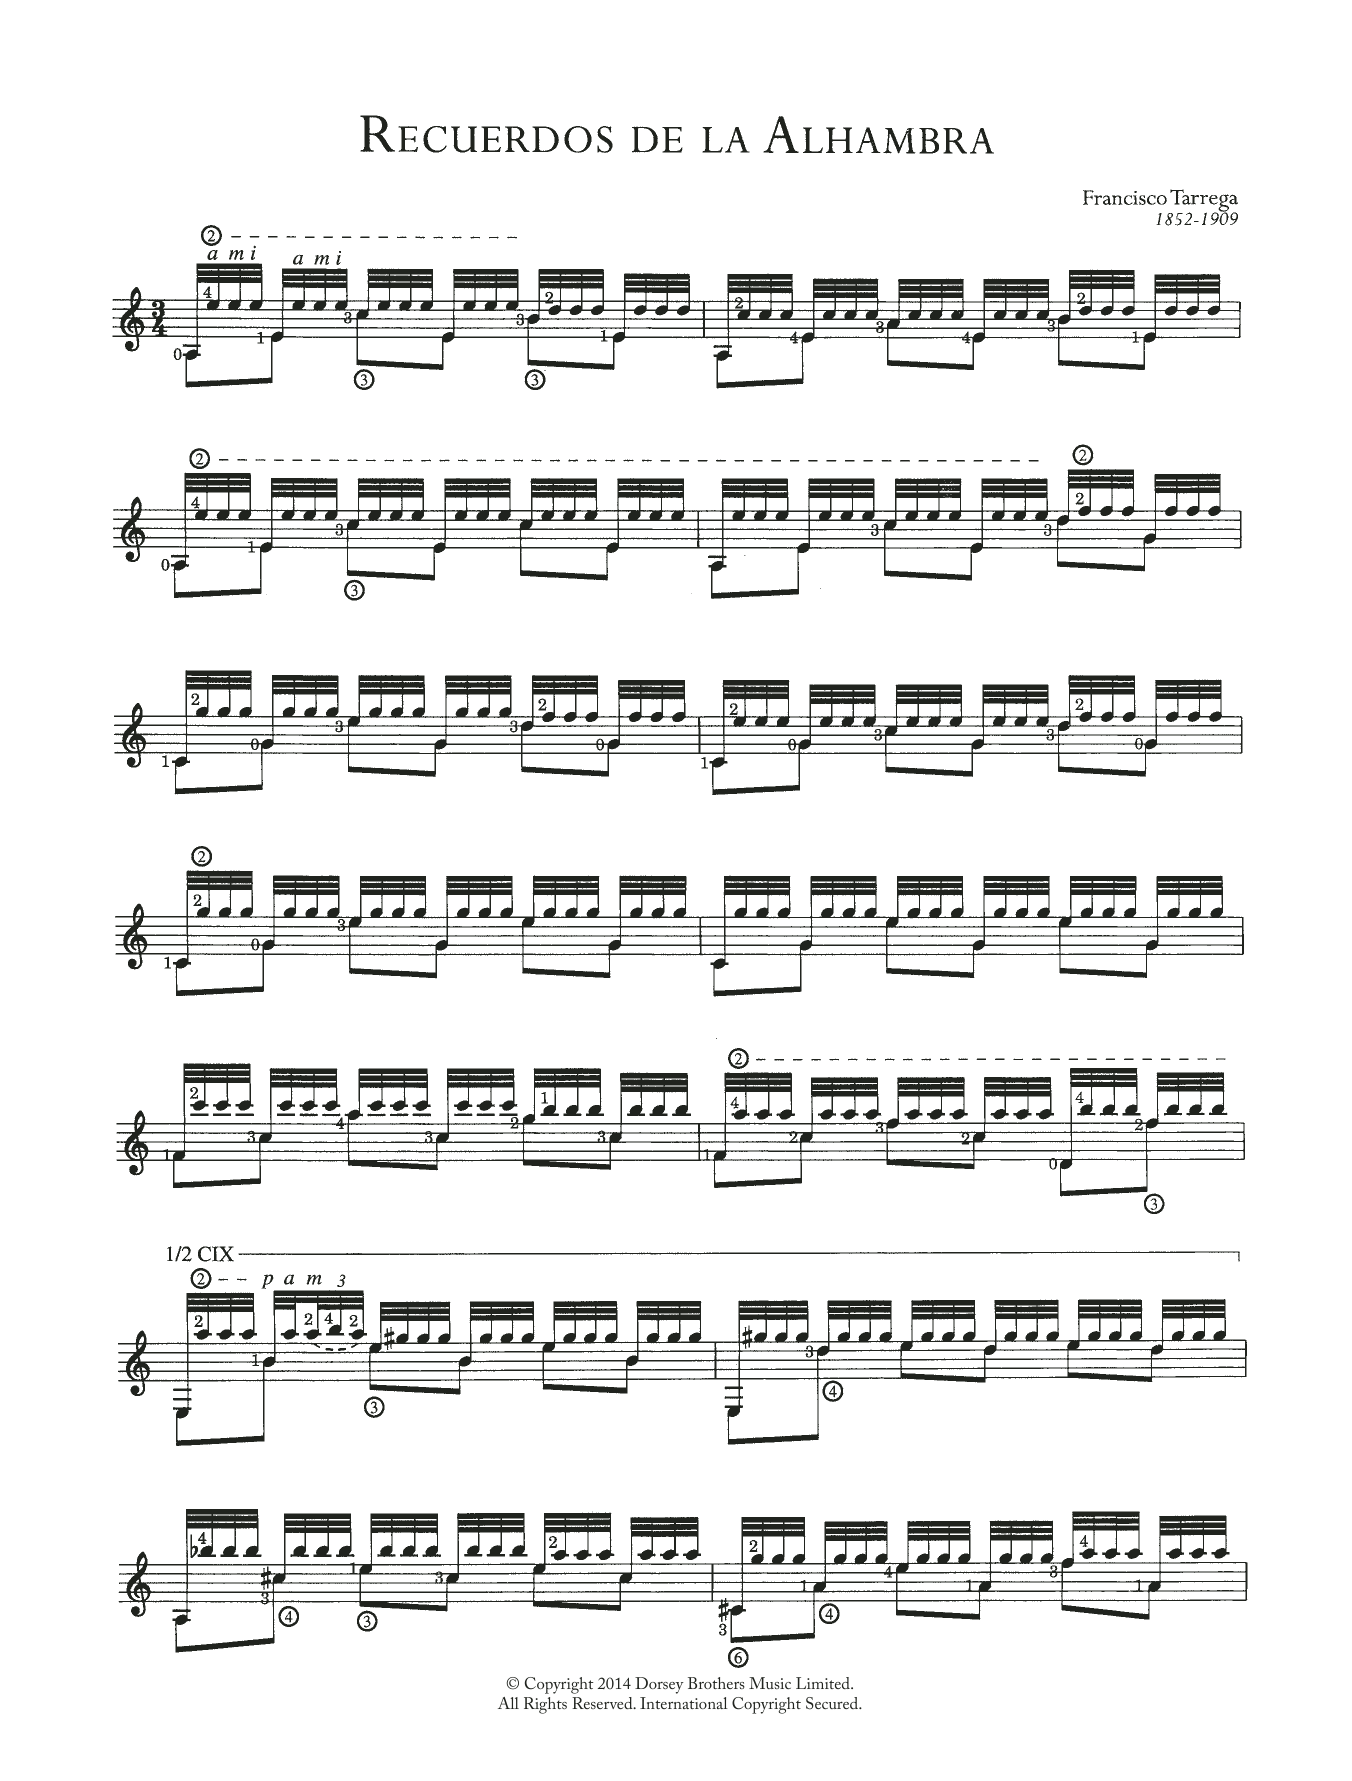 Francisco Tárrega Recuerdos De La Alhambra Sheet Music Notes & Chords for Guitar - Download or Print PDF